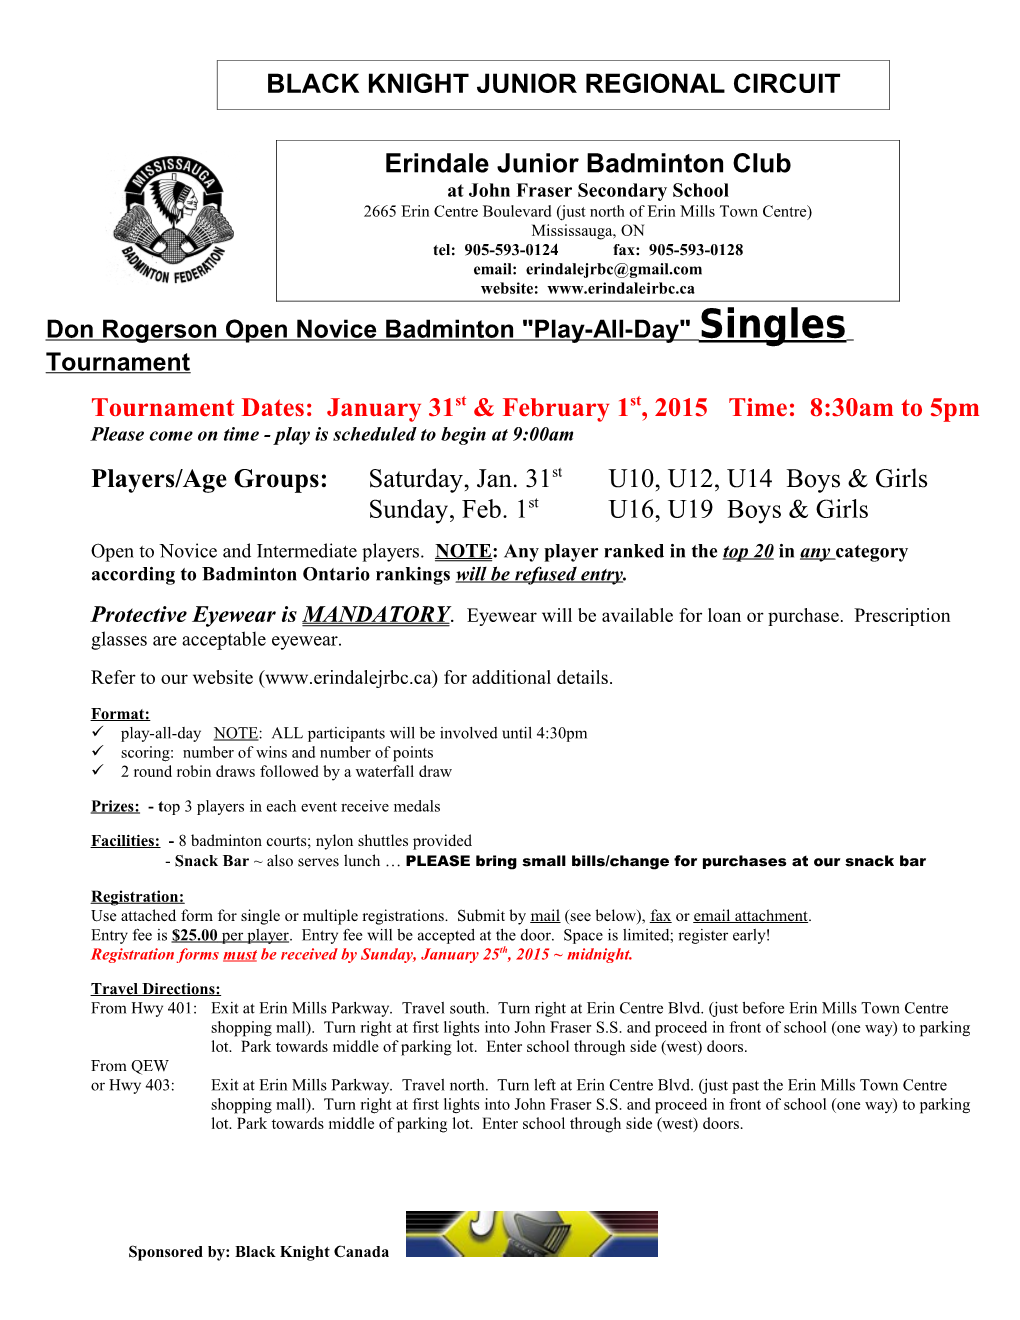 Don Rogerson Open Novice Badminton Play-All-Day Singles Tournament